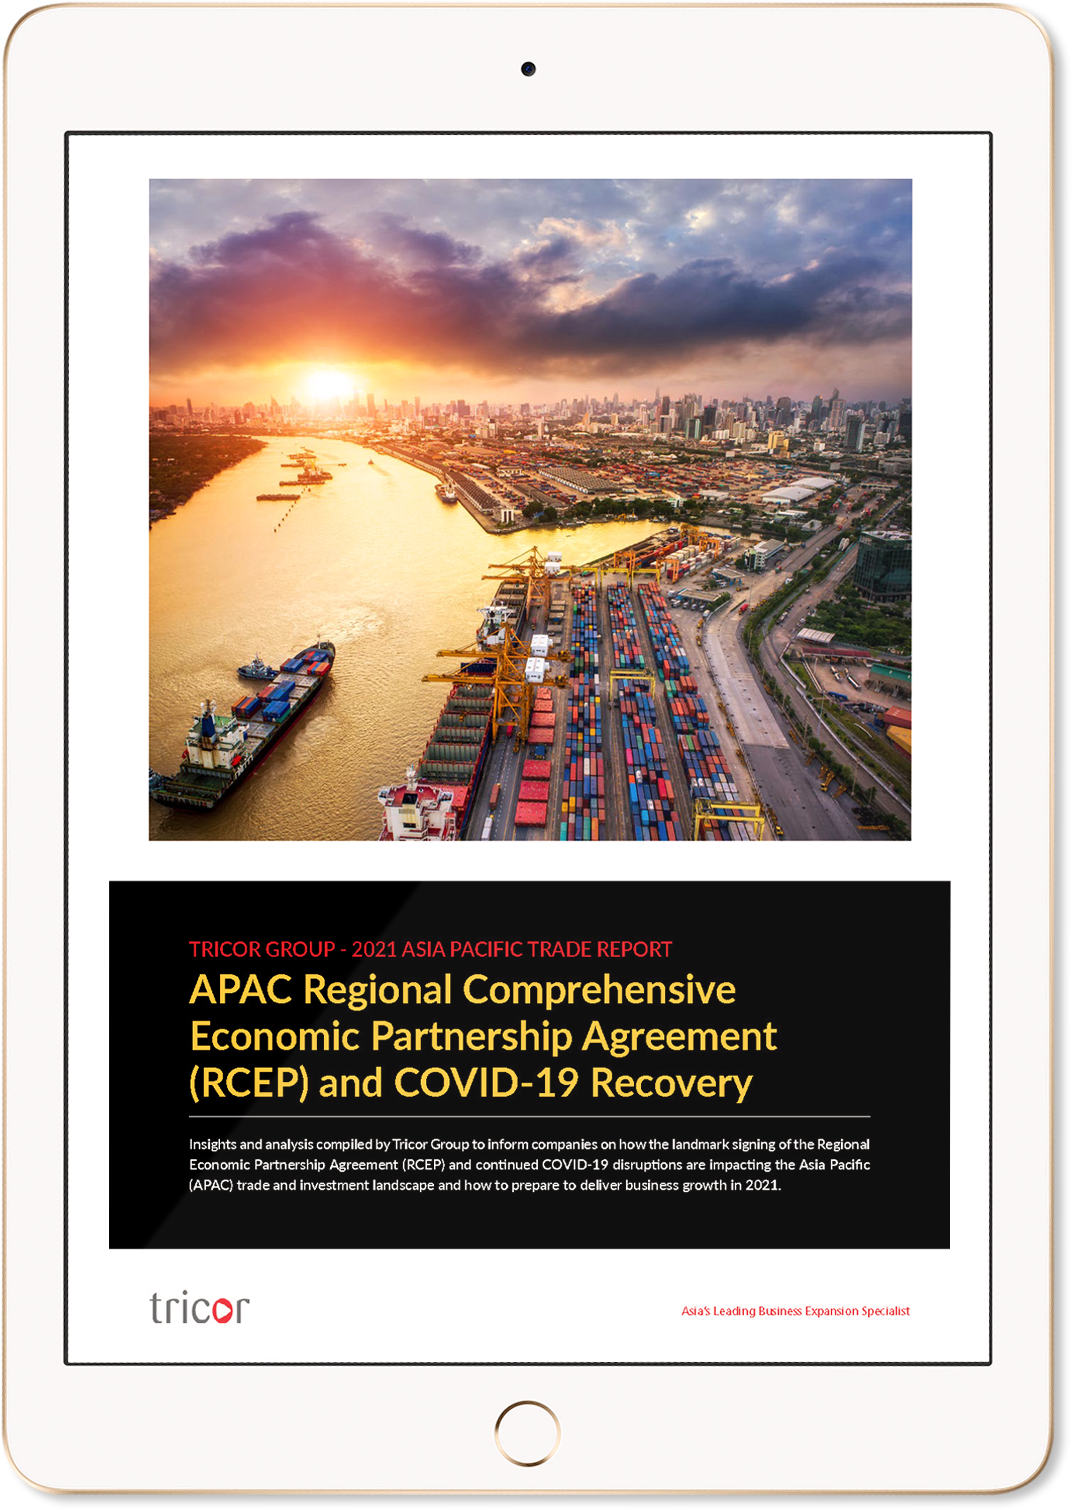 APAC Regional Comprehensive Economic Partnership Agreement (RCEP) and COVID-19 Recovery Ipad Image